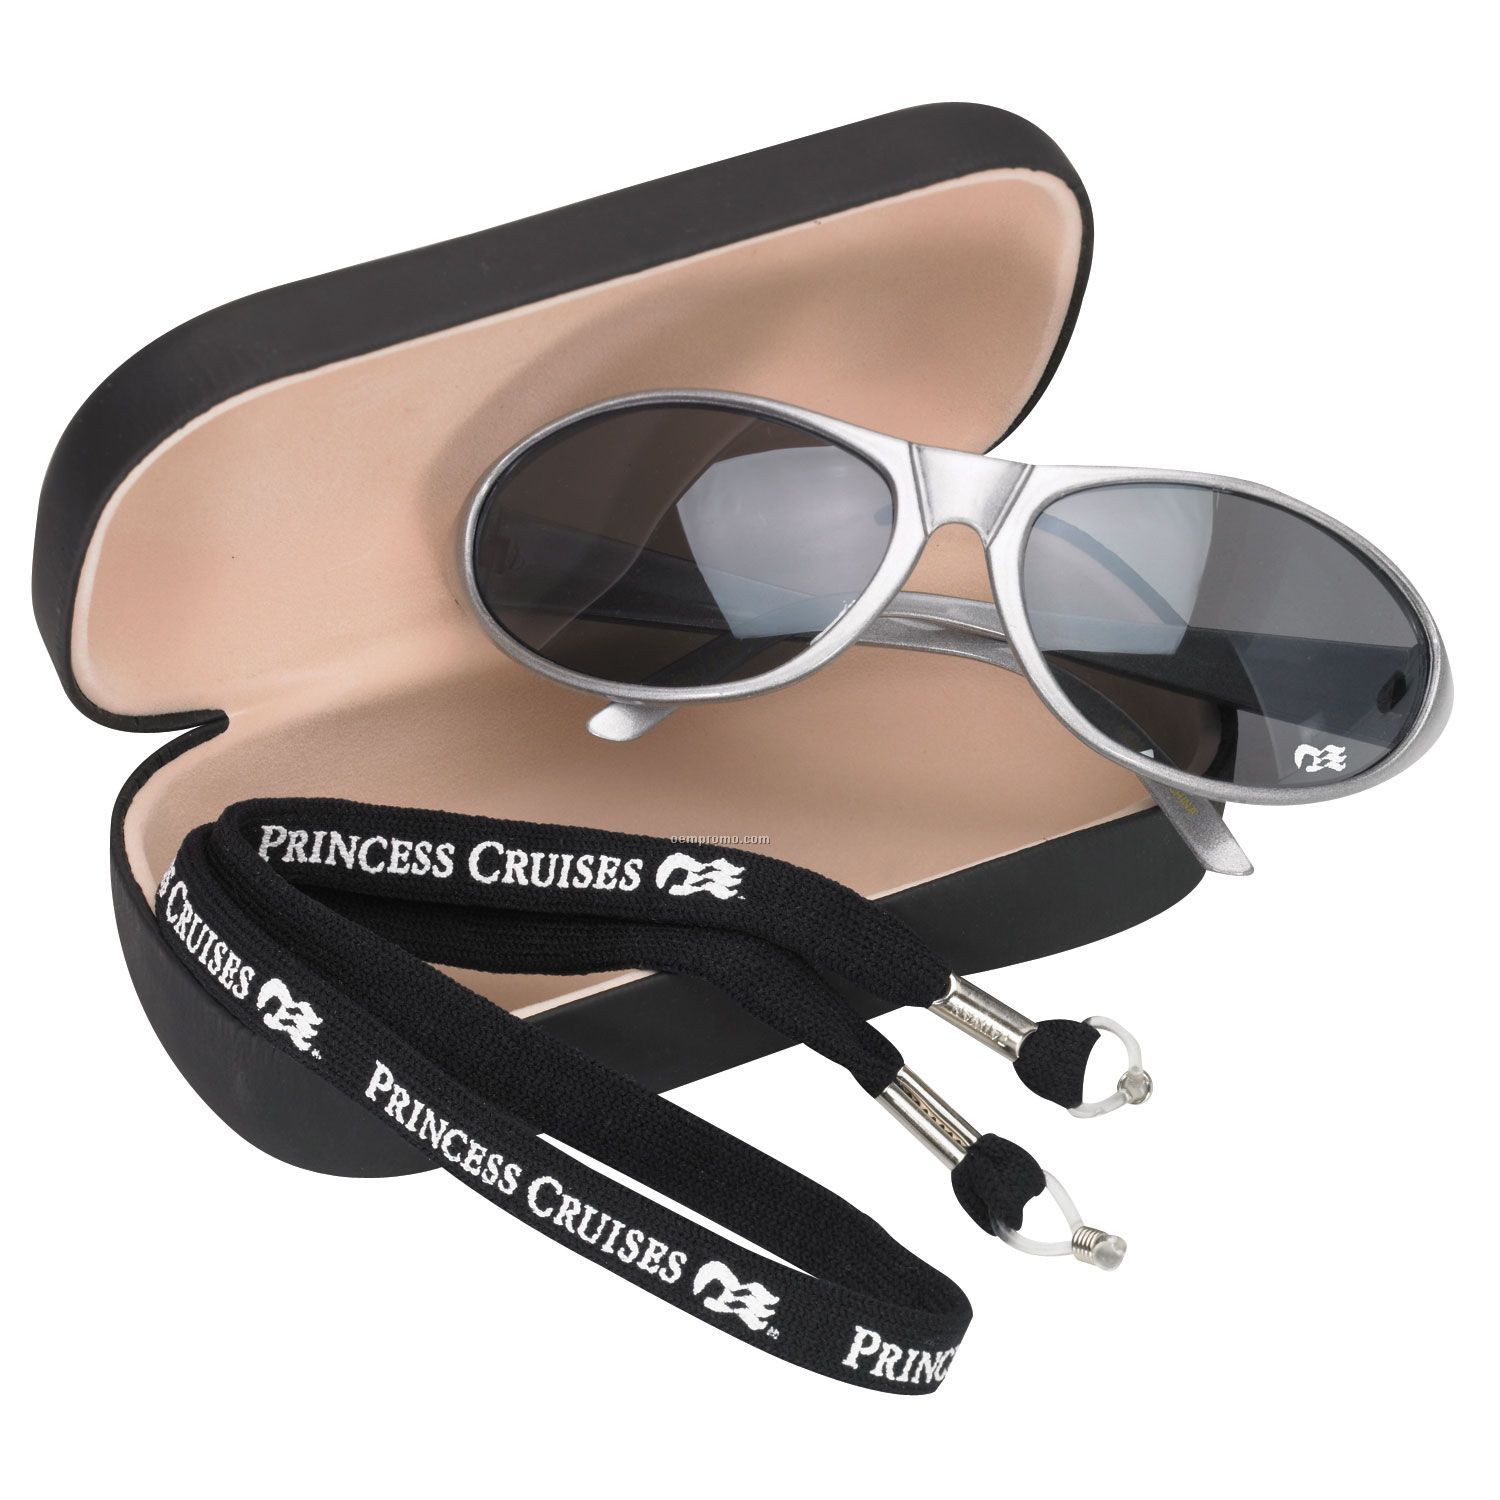 The Cruiser Packaged Ensembles Sunglasses & Curve Metal Case